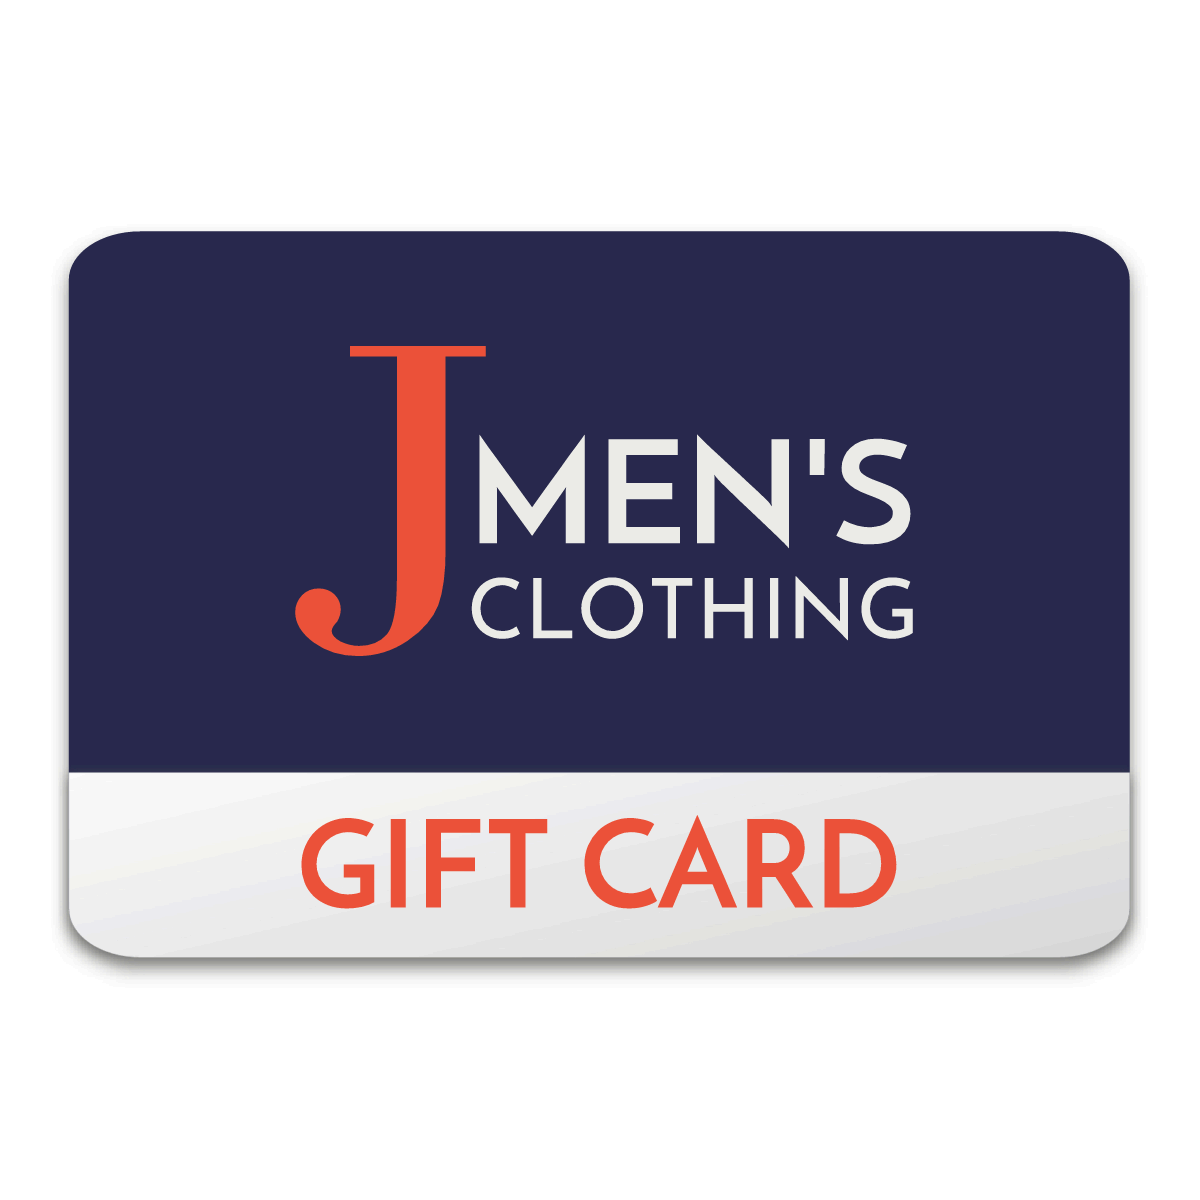 J. Men's Clothing Gift Card